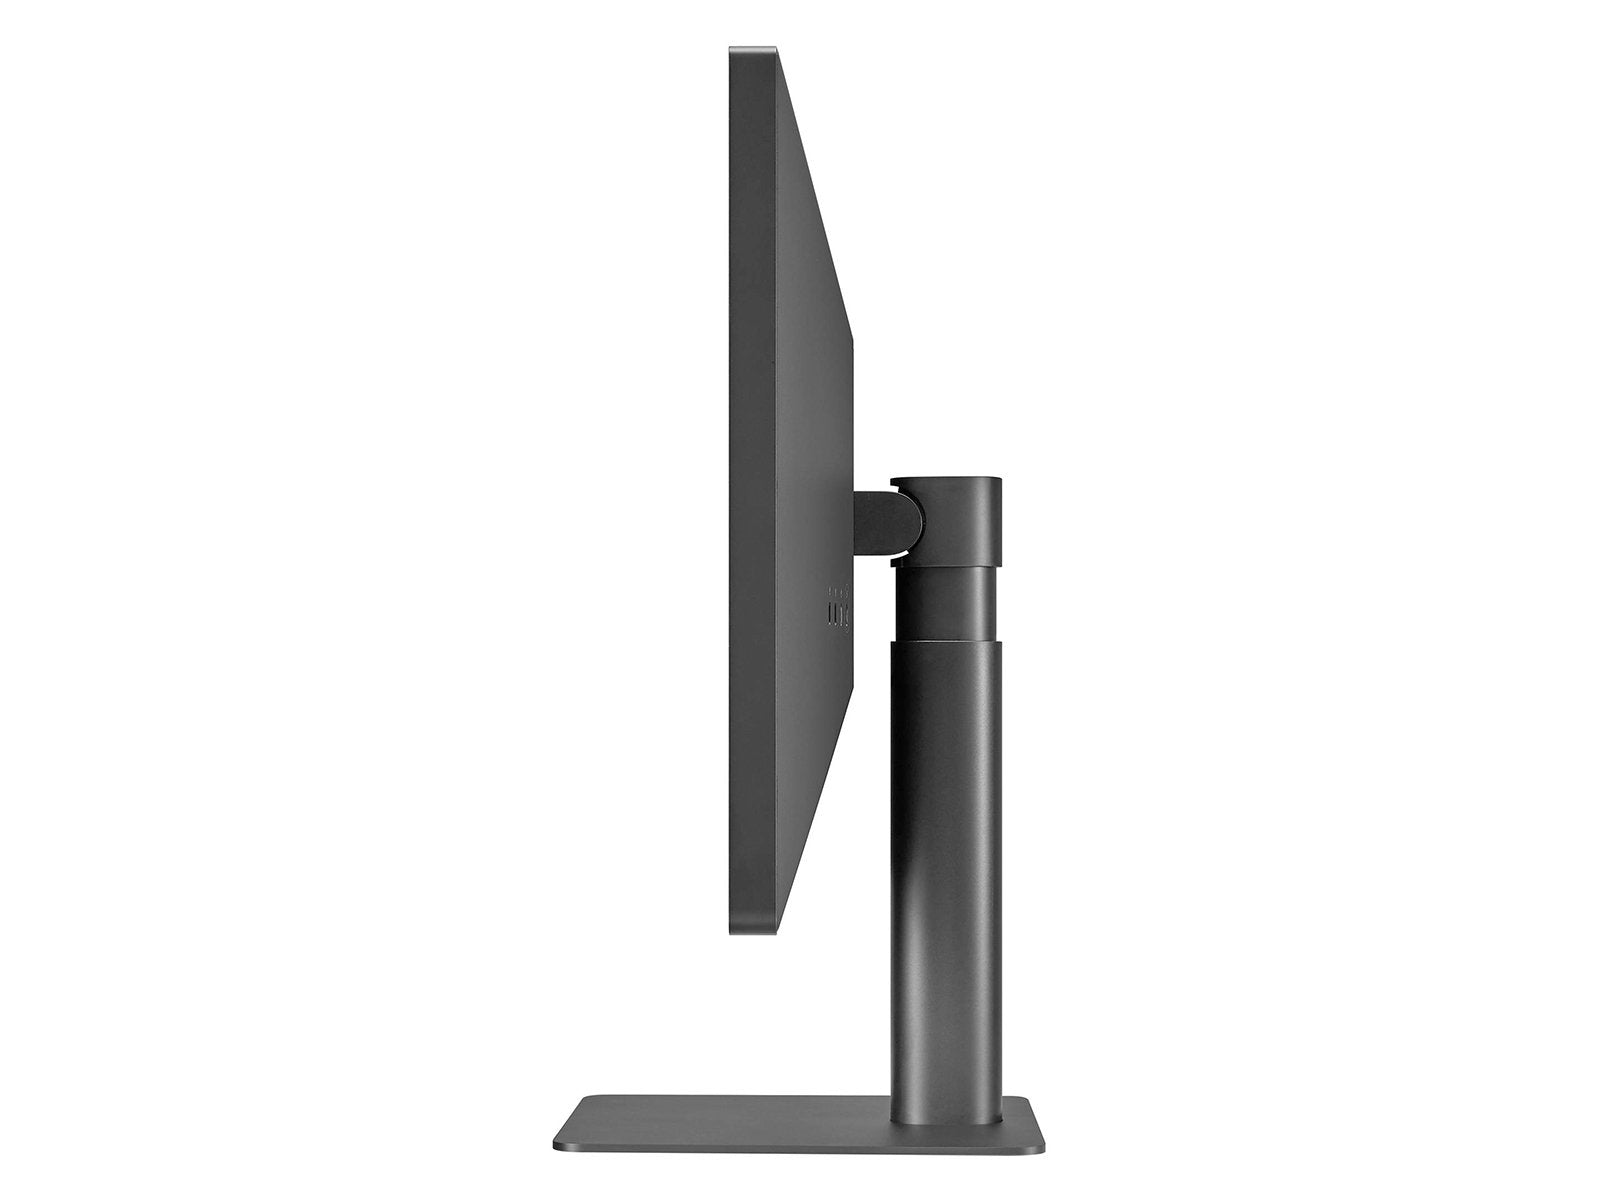 LG UltraFine 5K 27" Color LED Display Monitor (27MD5KL-B) Monitors.com 